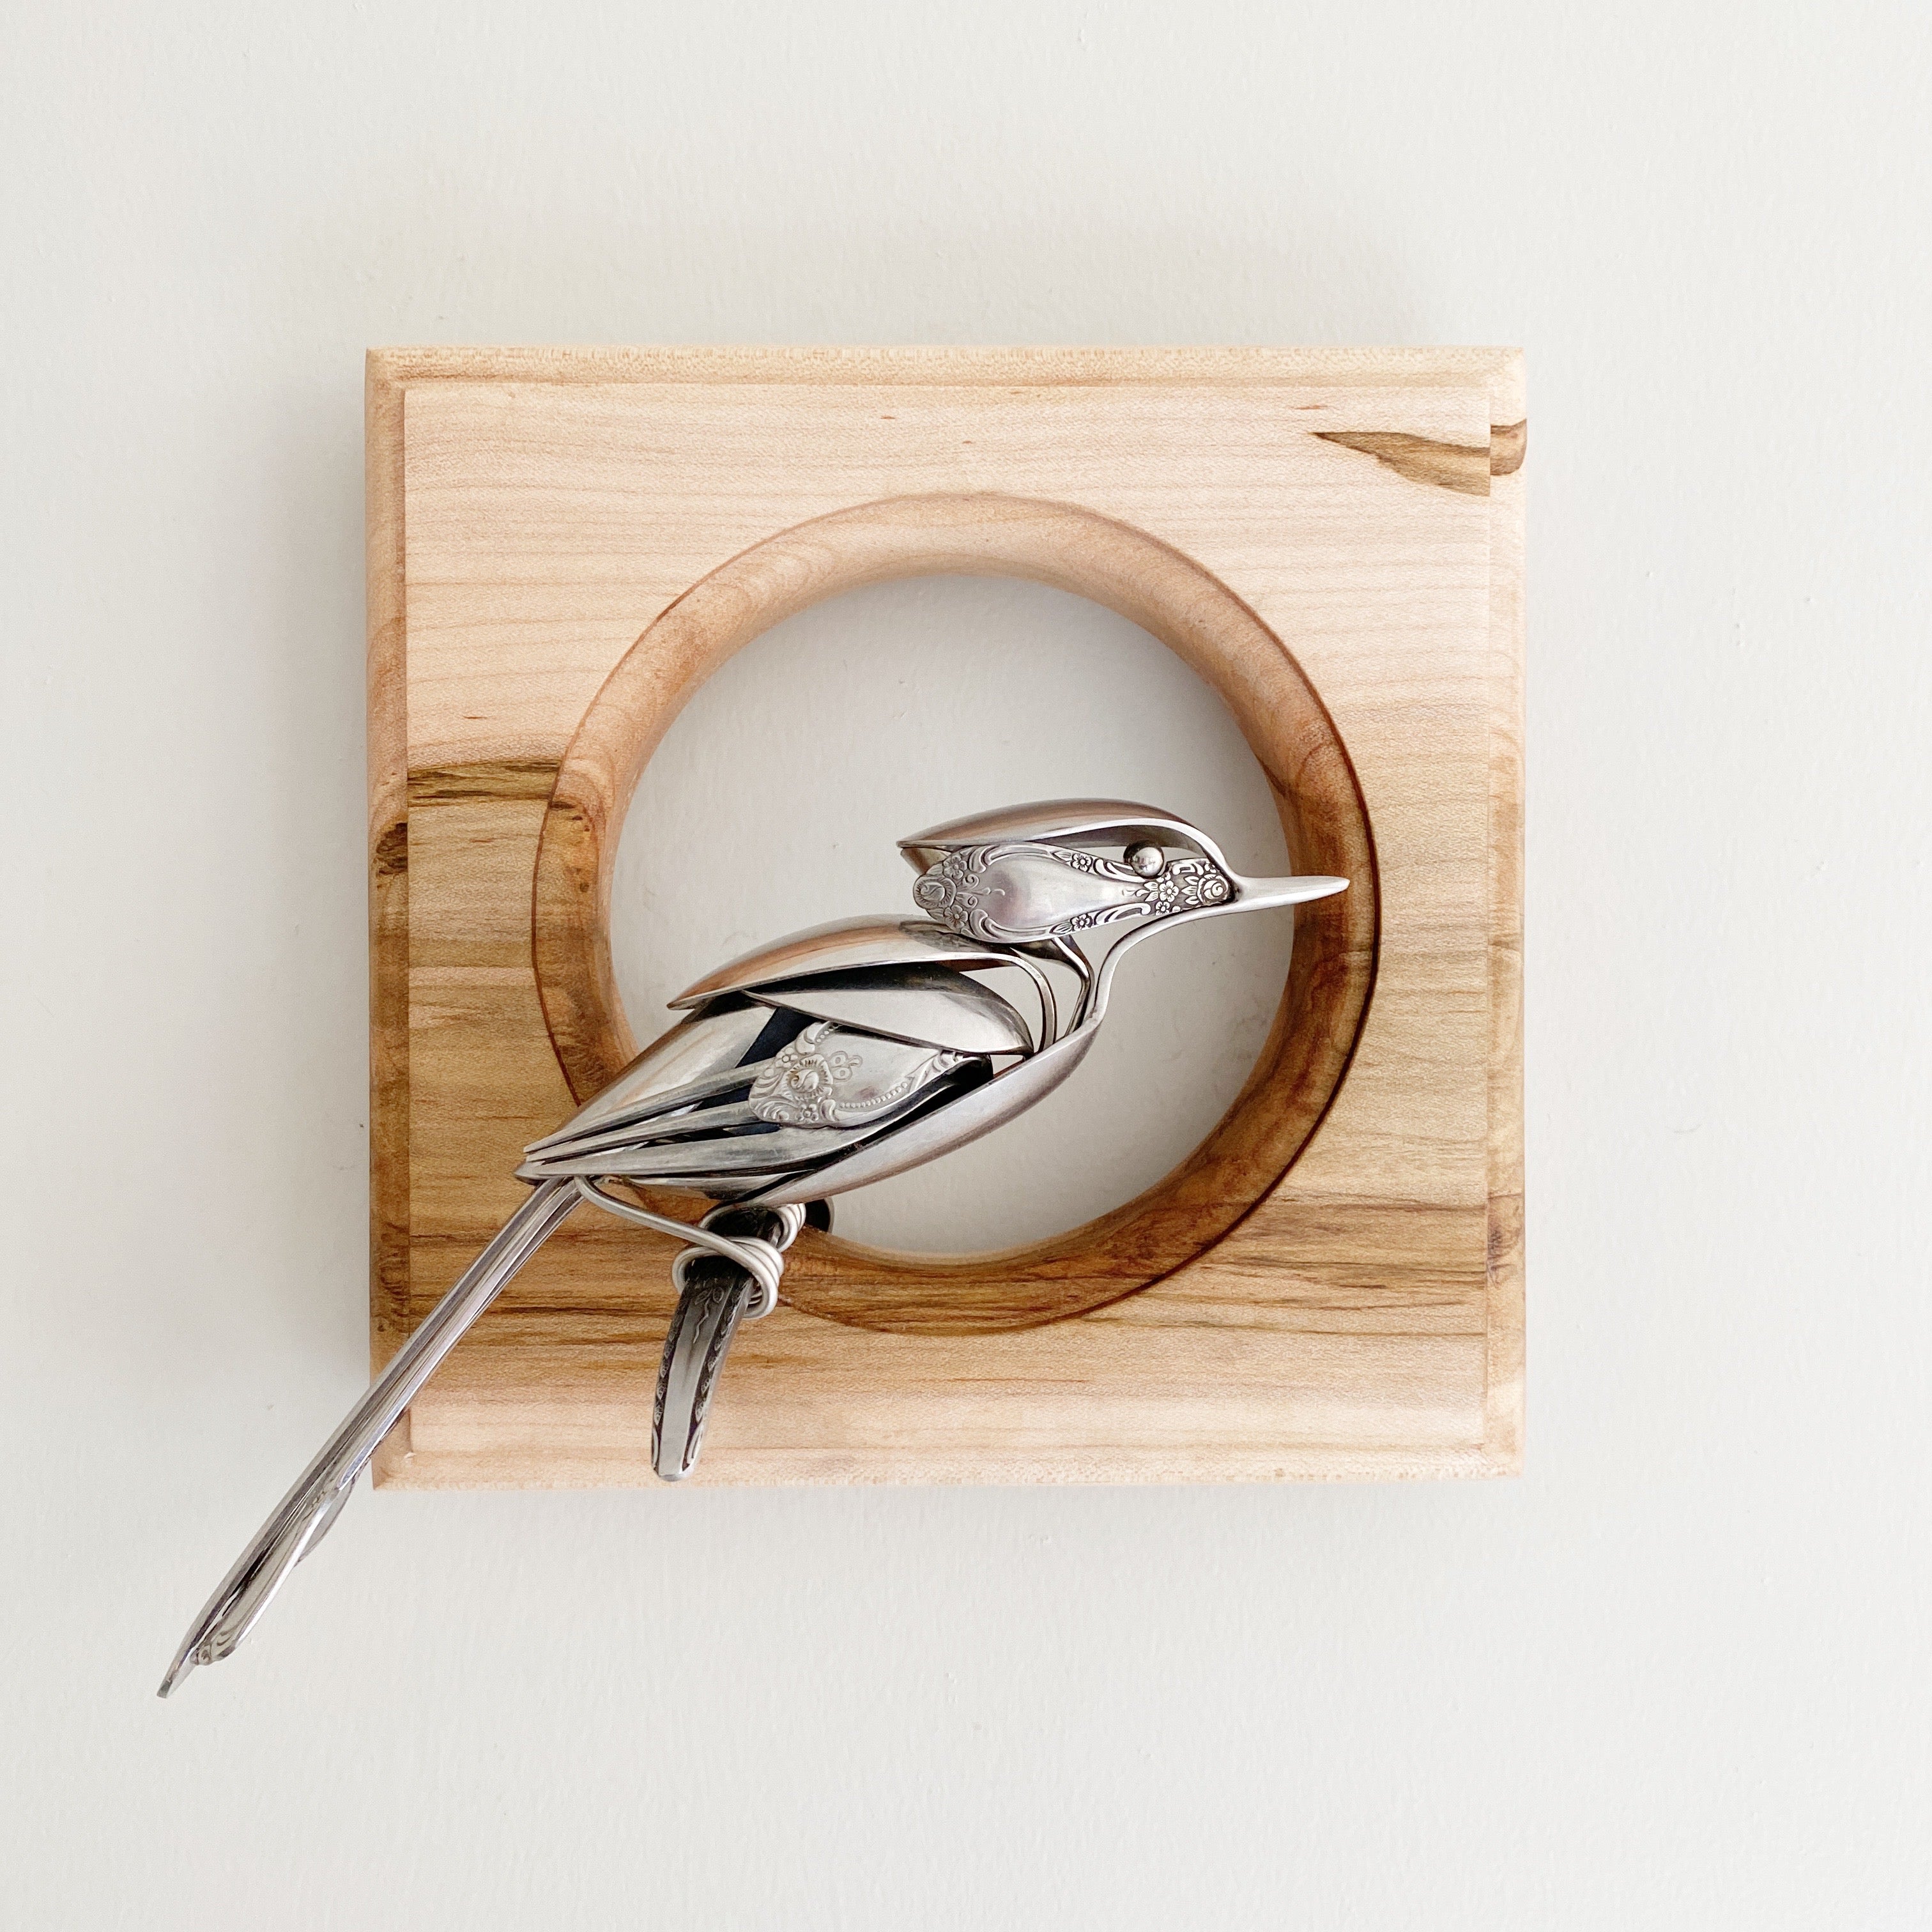 "Marion" - Upcycled Metal Bird Sculpture